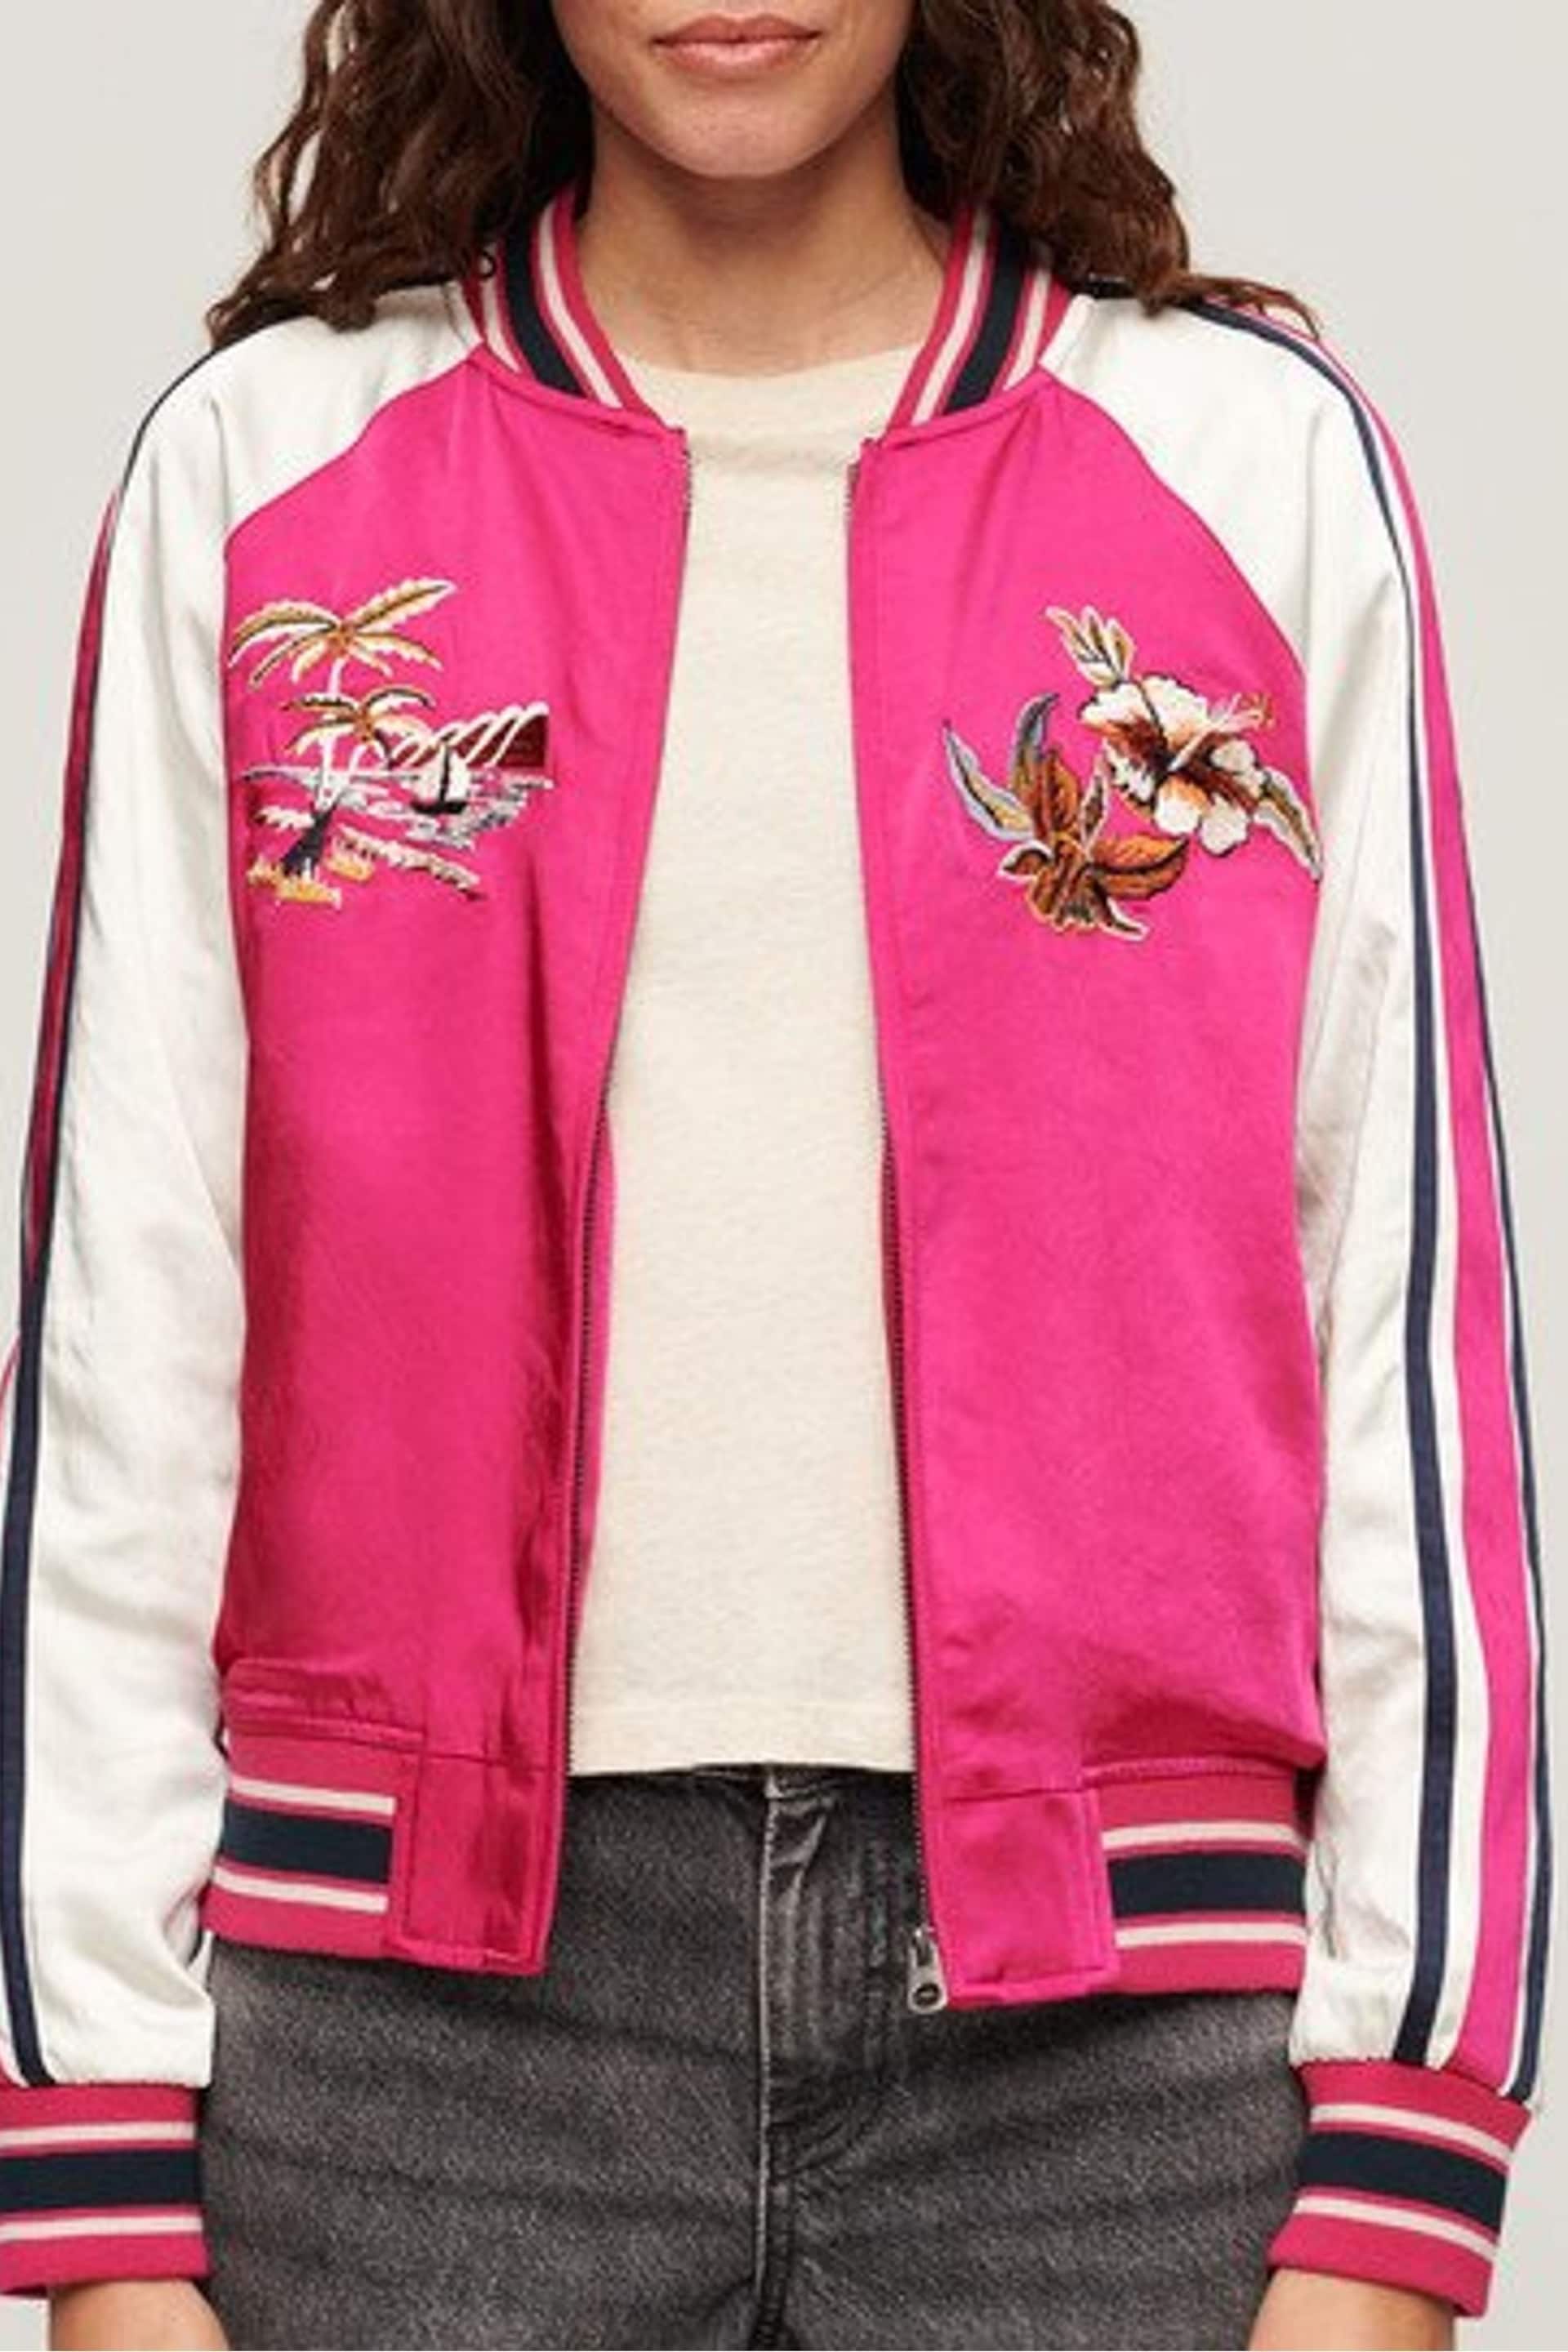 Superdry Pink Suikajan Embroidered Bomber Jacket - Image 1 of 6